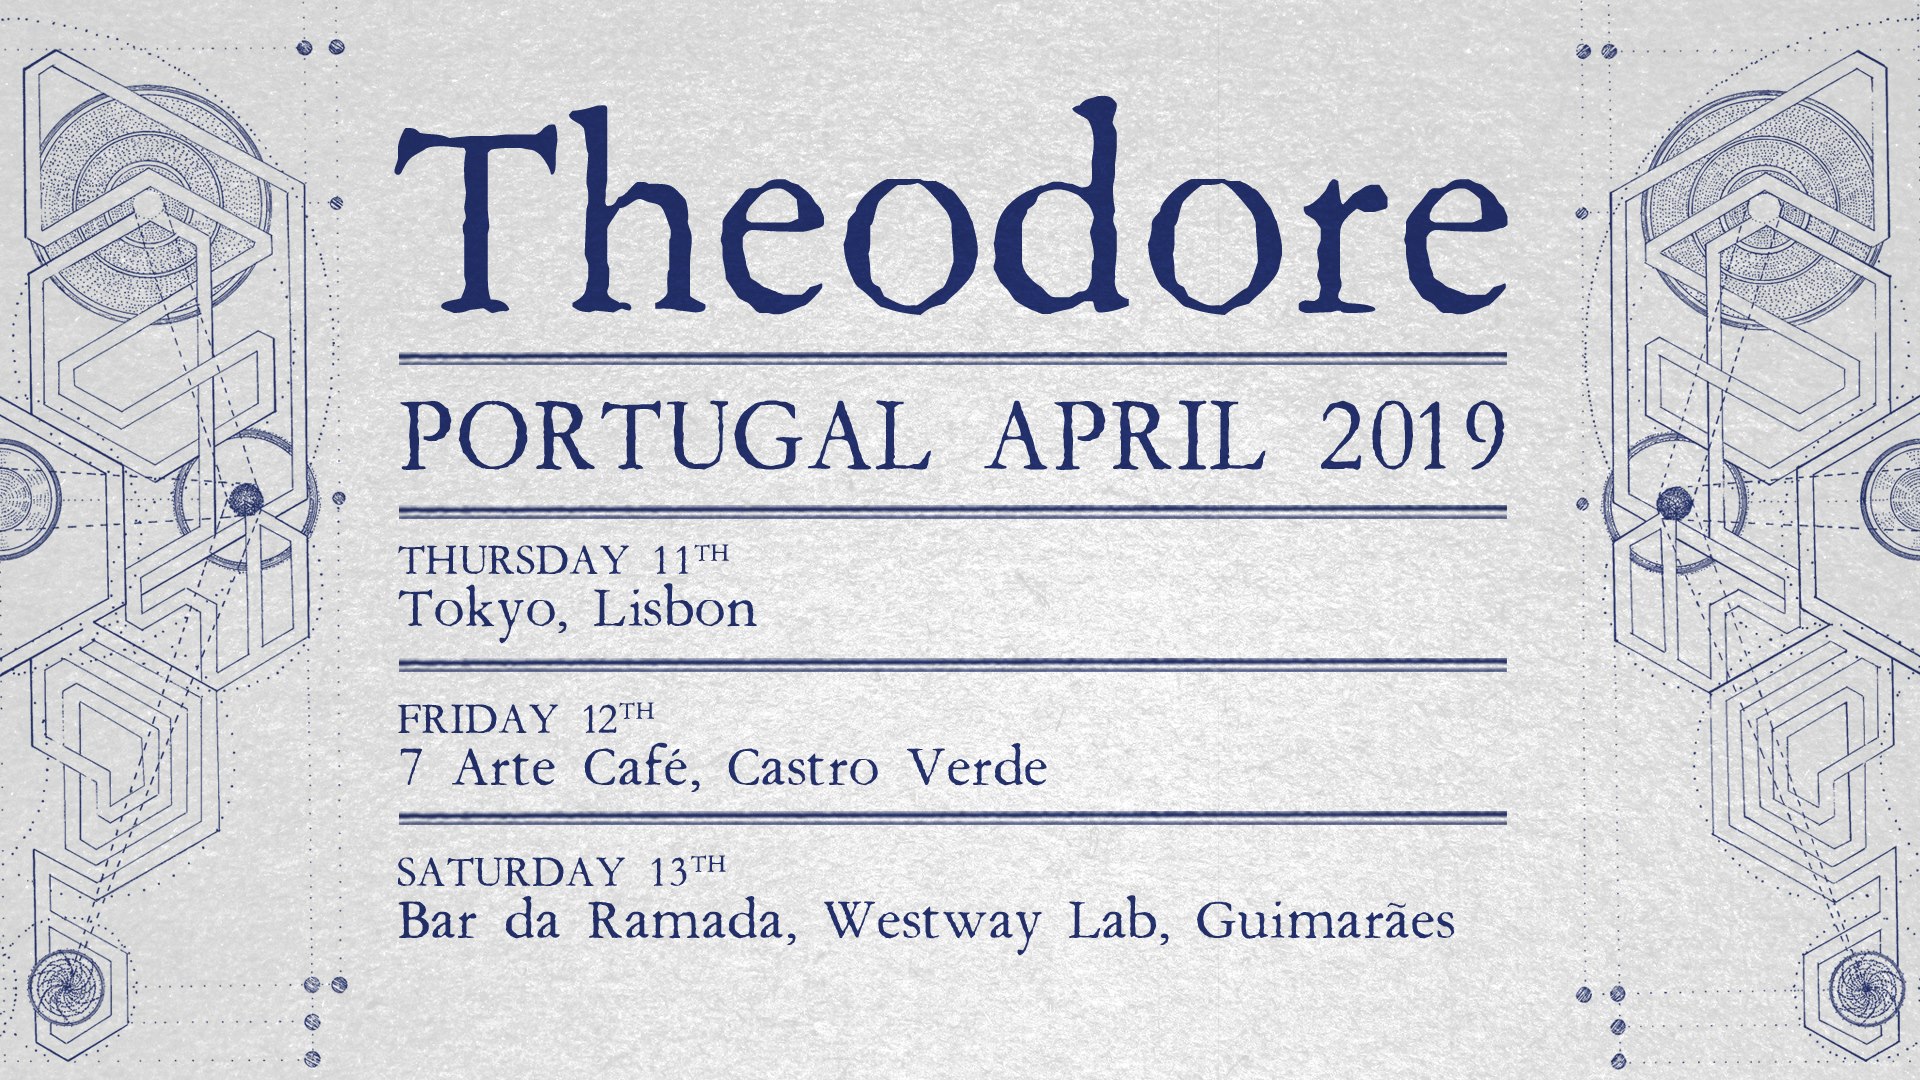 Theodore – Portugal Tour 2019